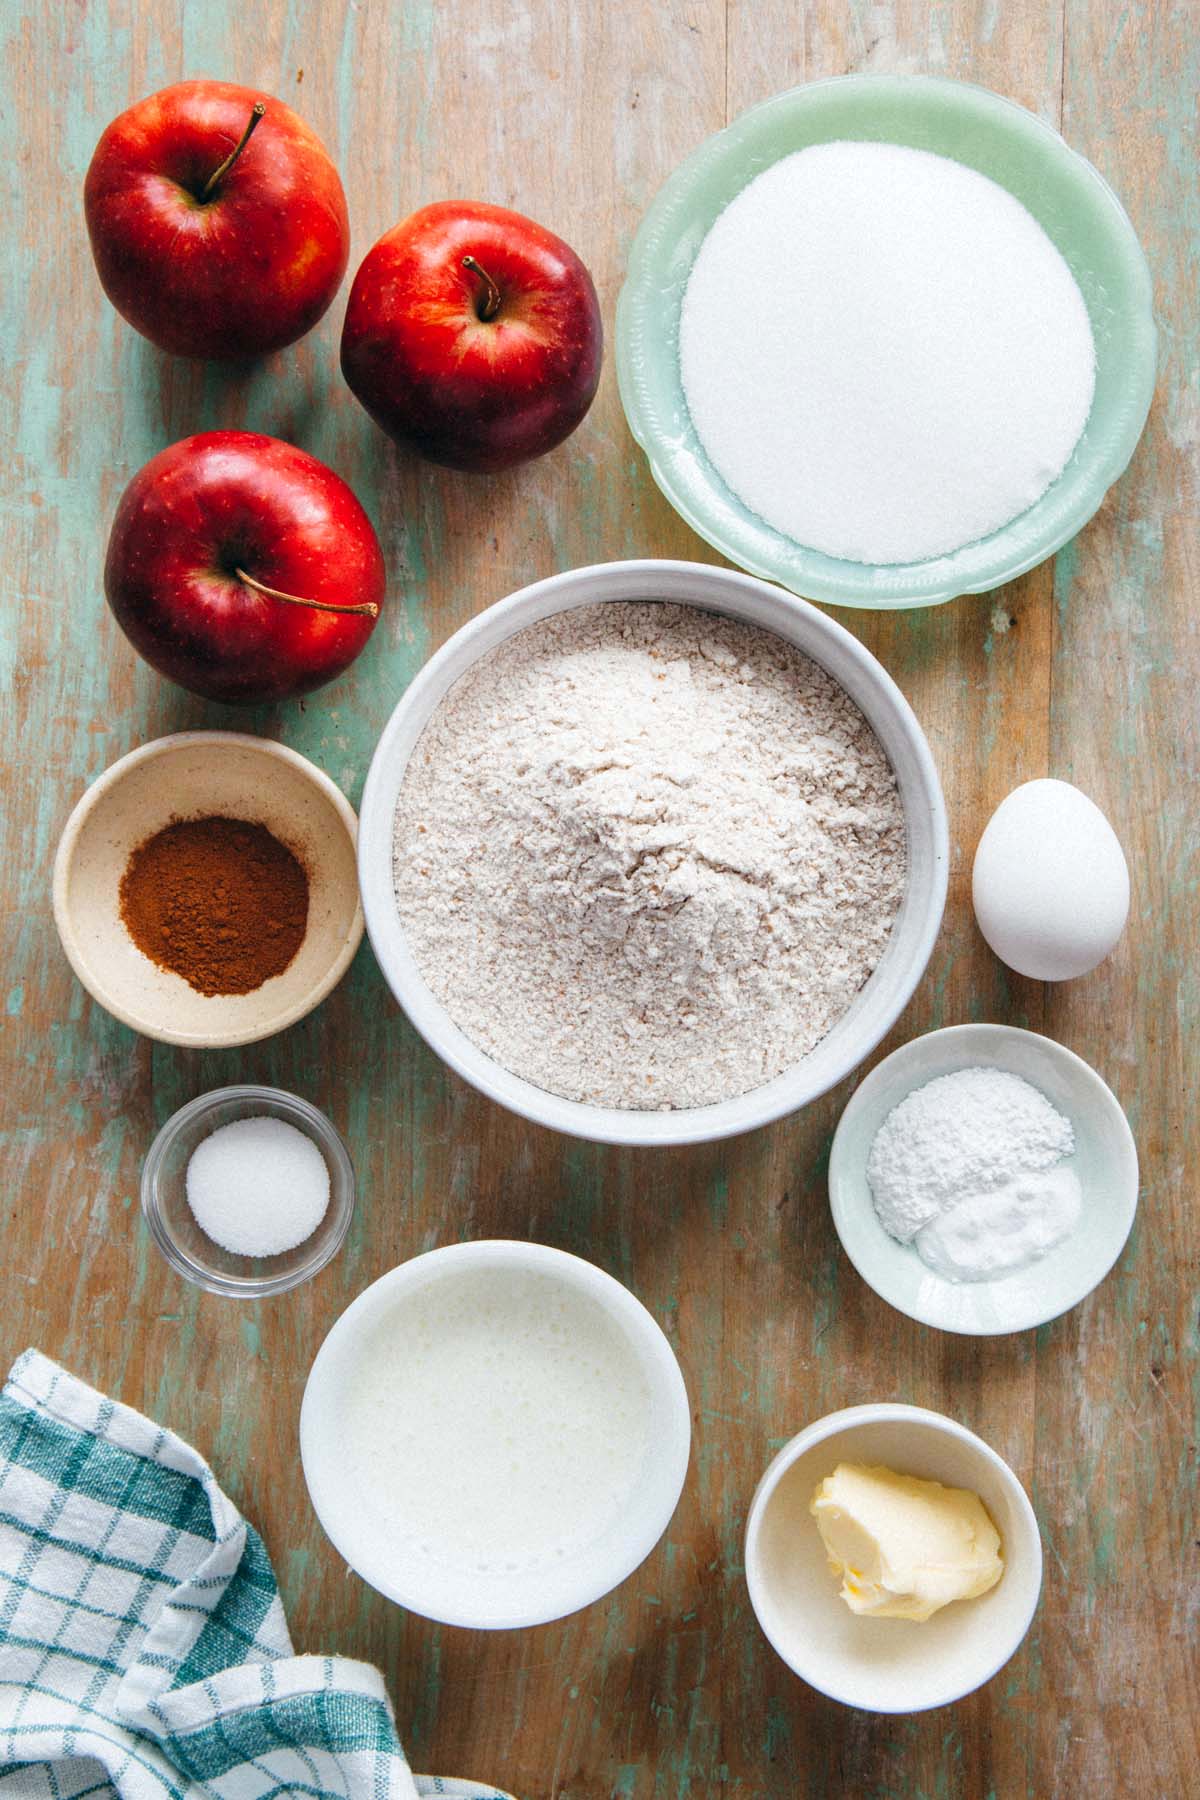 Ingredients to make apple cinnamon quick bread.